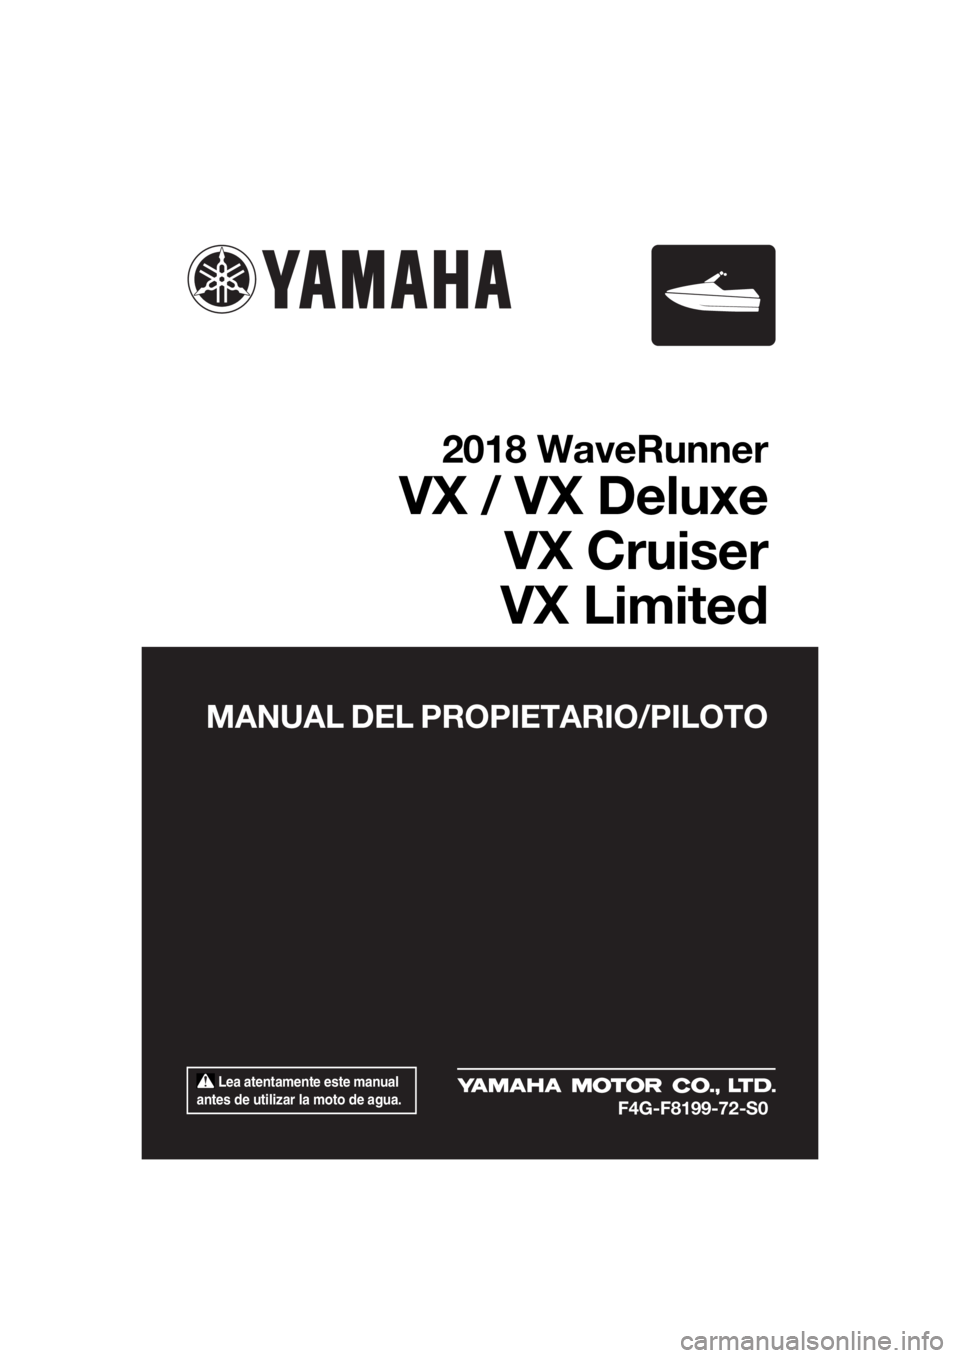 YAMAHA VX 2018  Manuale de Empleo (in Spanish) 